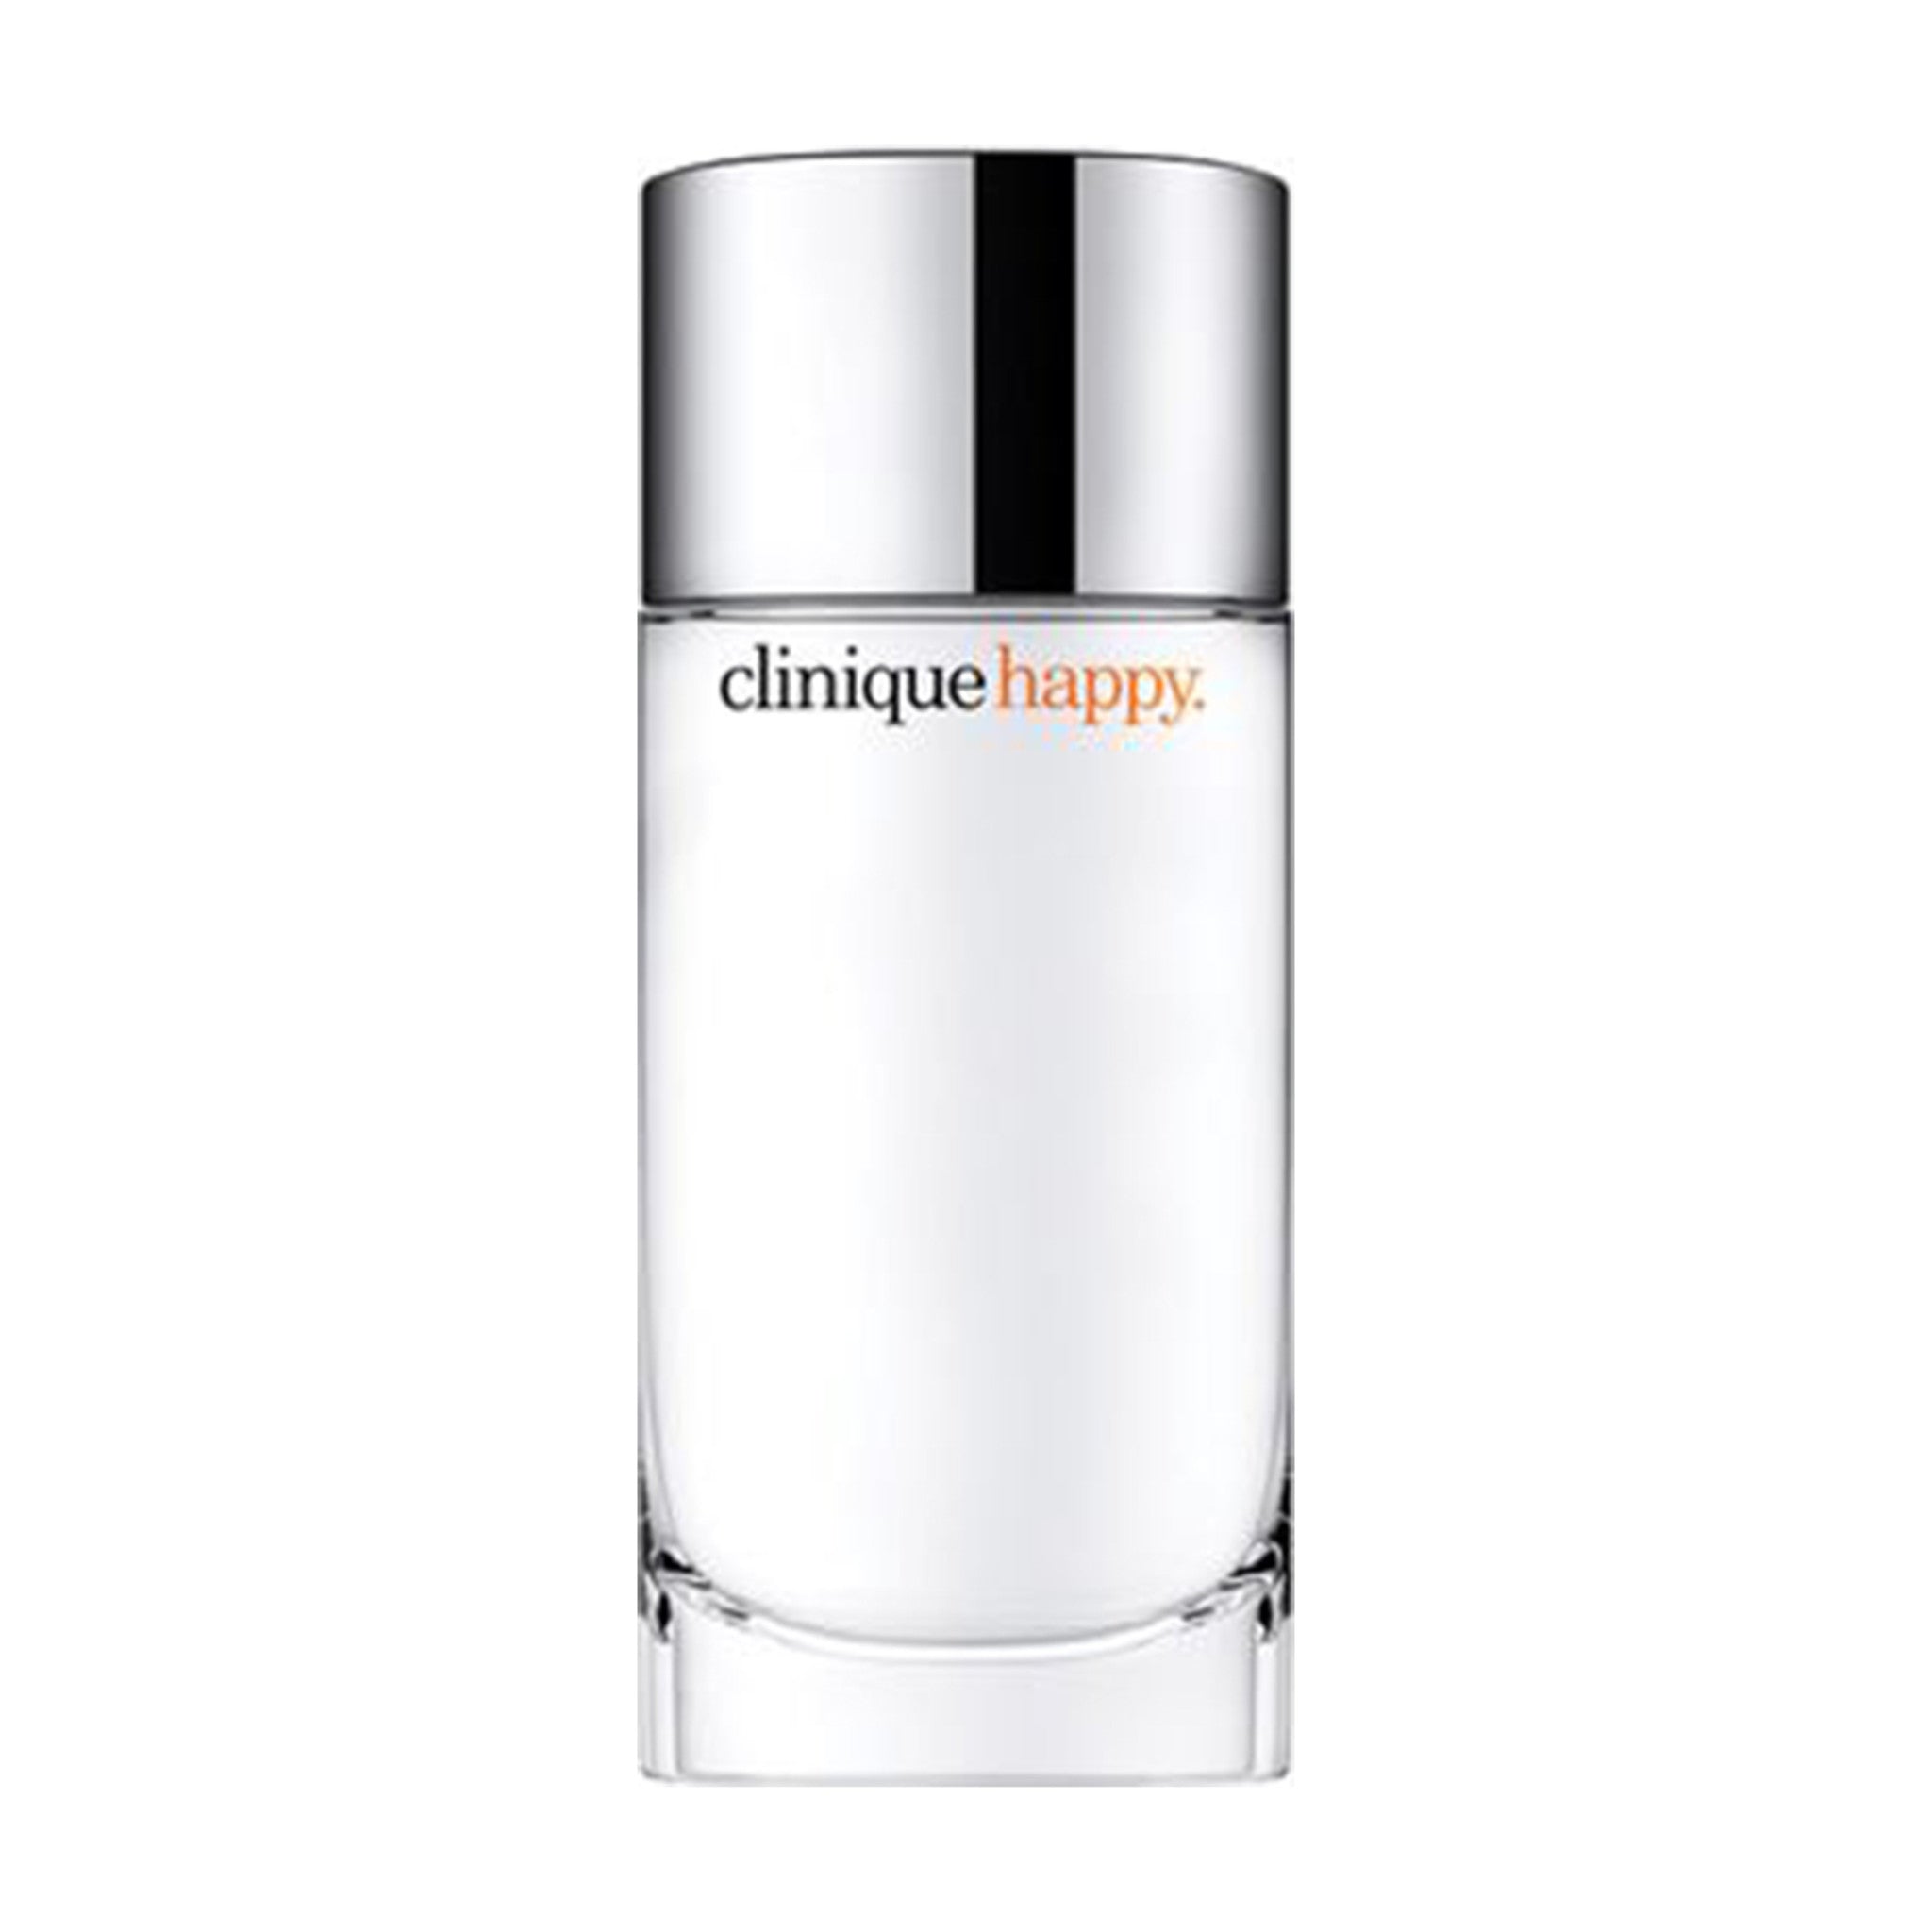 Clinique Happy Eau De Parfum Spray - 1.7 fl oz